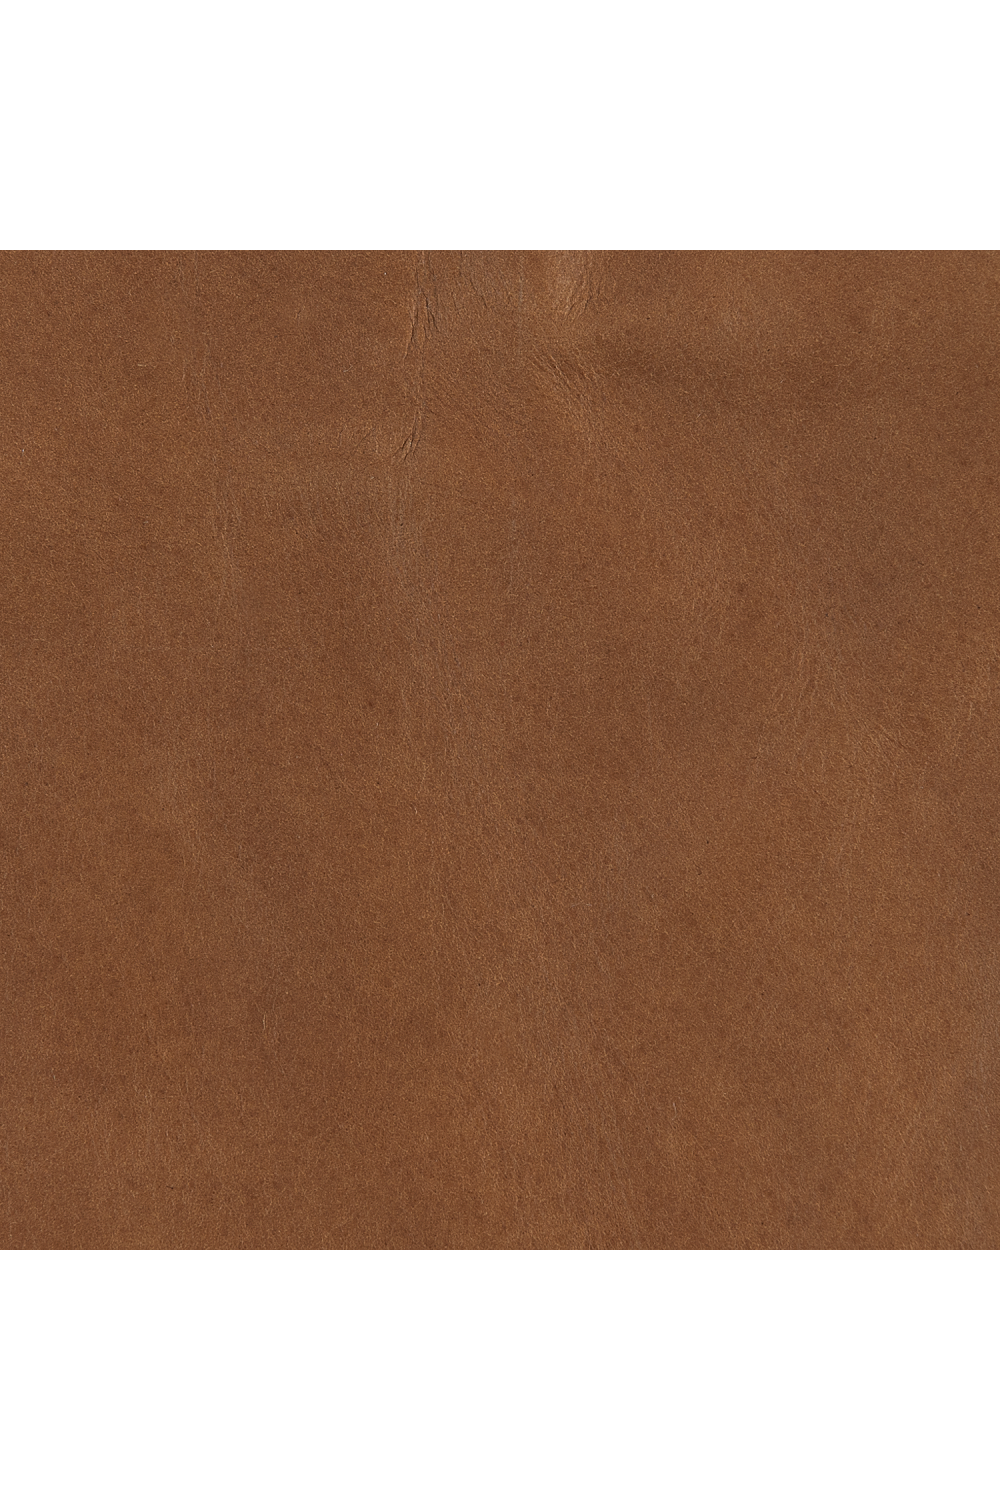 Brown Leather Bed | Caracole Rhythm | Oroa.com